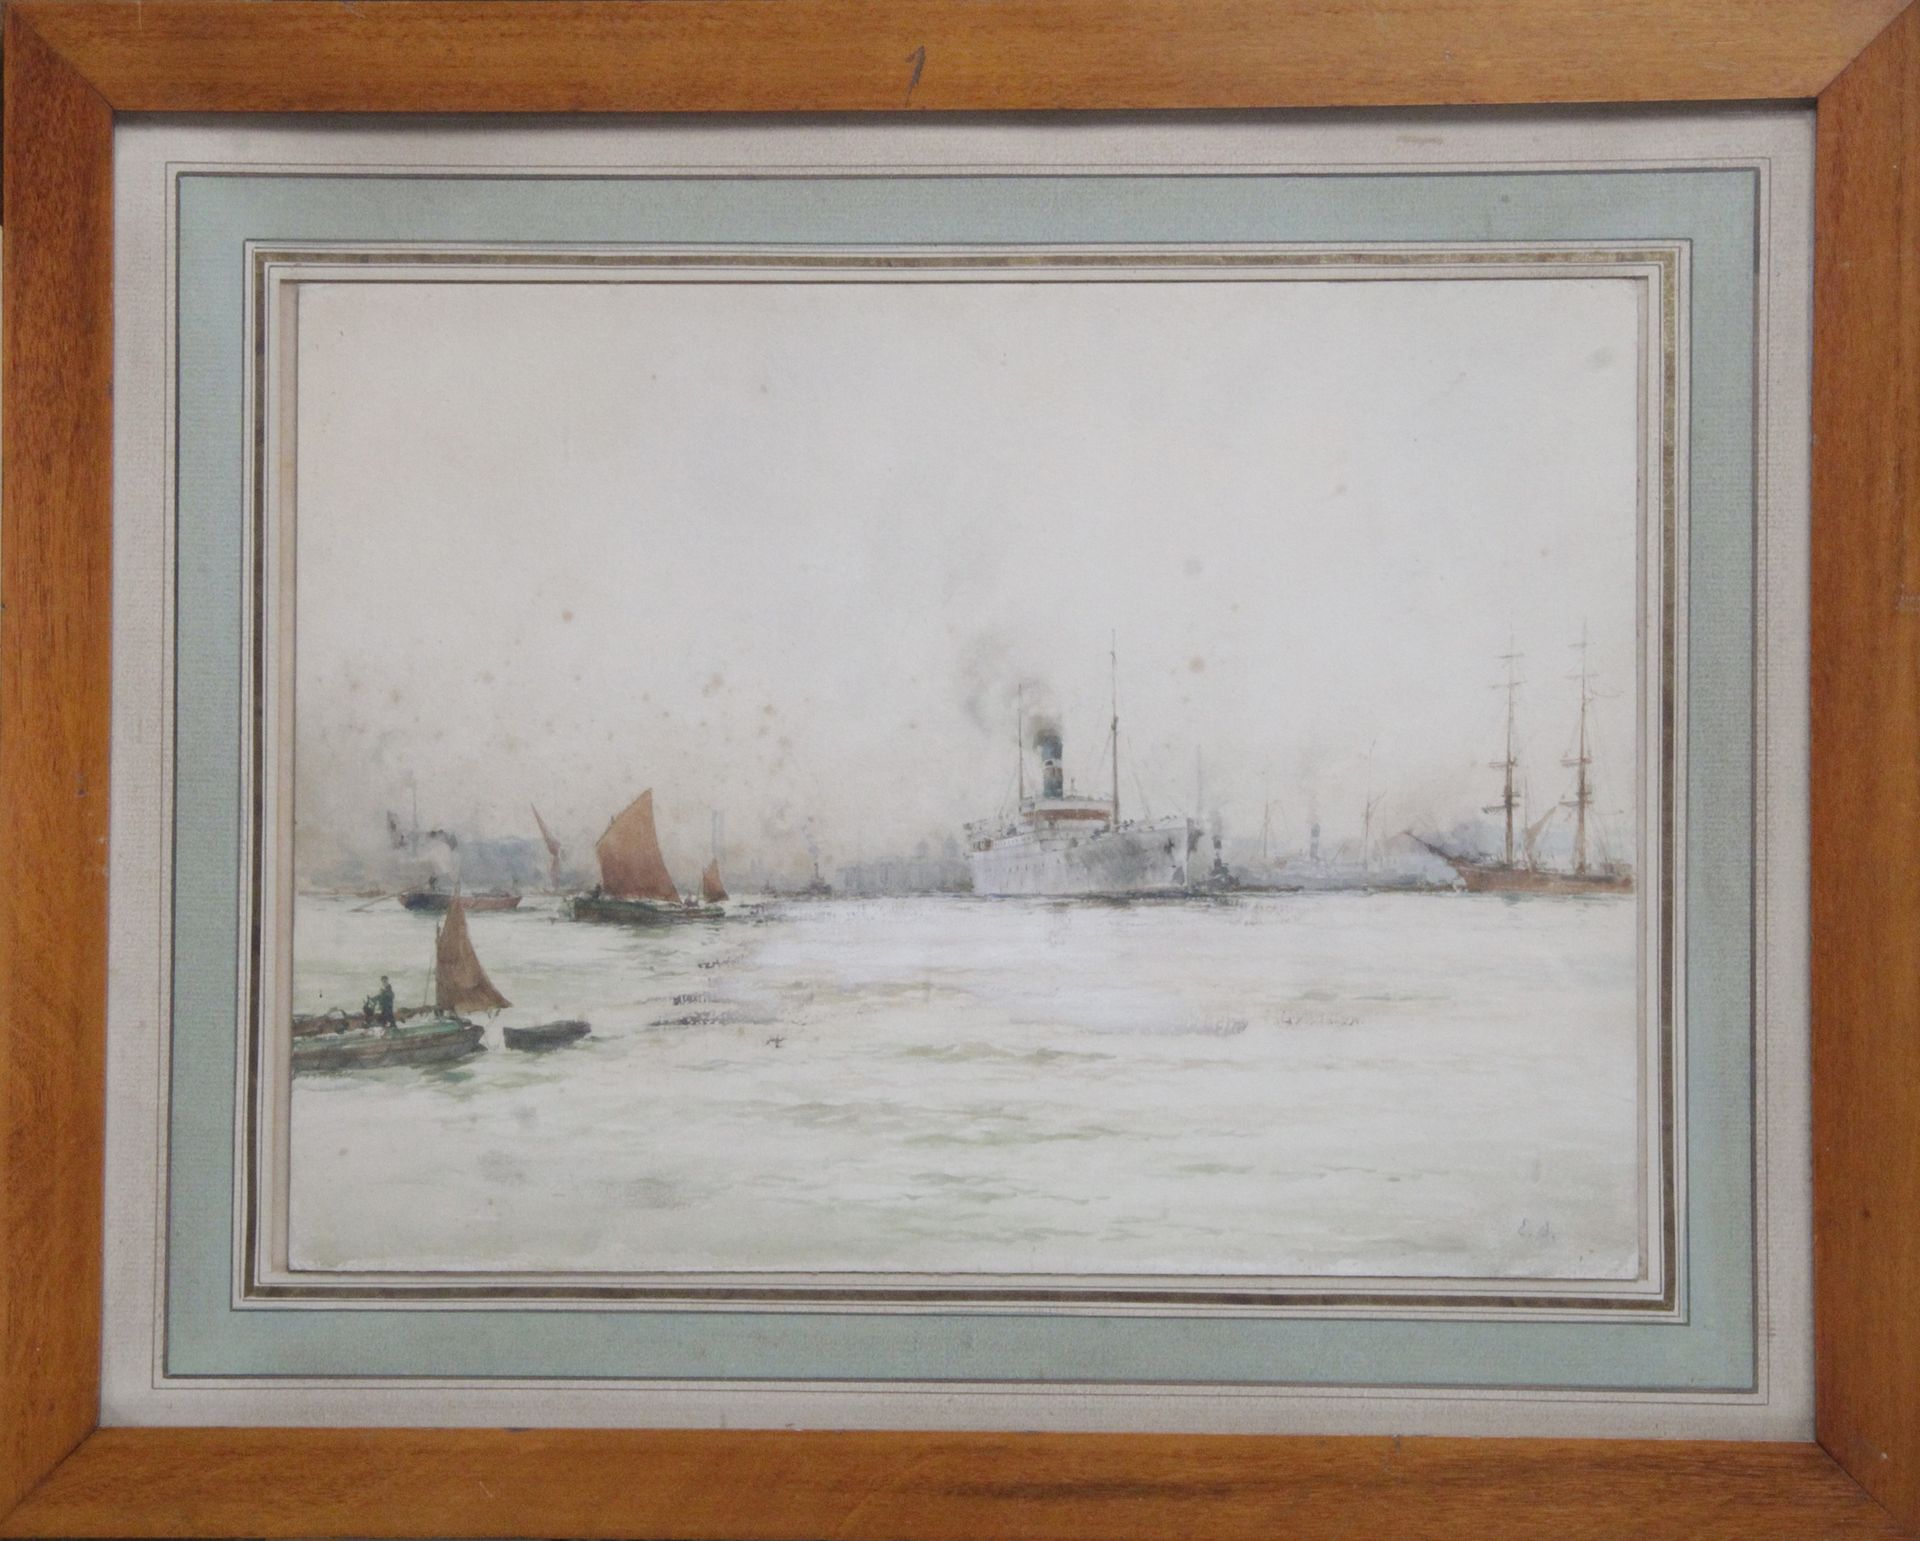 Null xx世纪的法国学校。

"一个港口的景色 

水彩画，有E.D.的字样。

26.5 x 36.5 厘米

(潮湿的污渍)